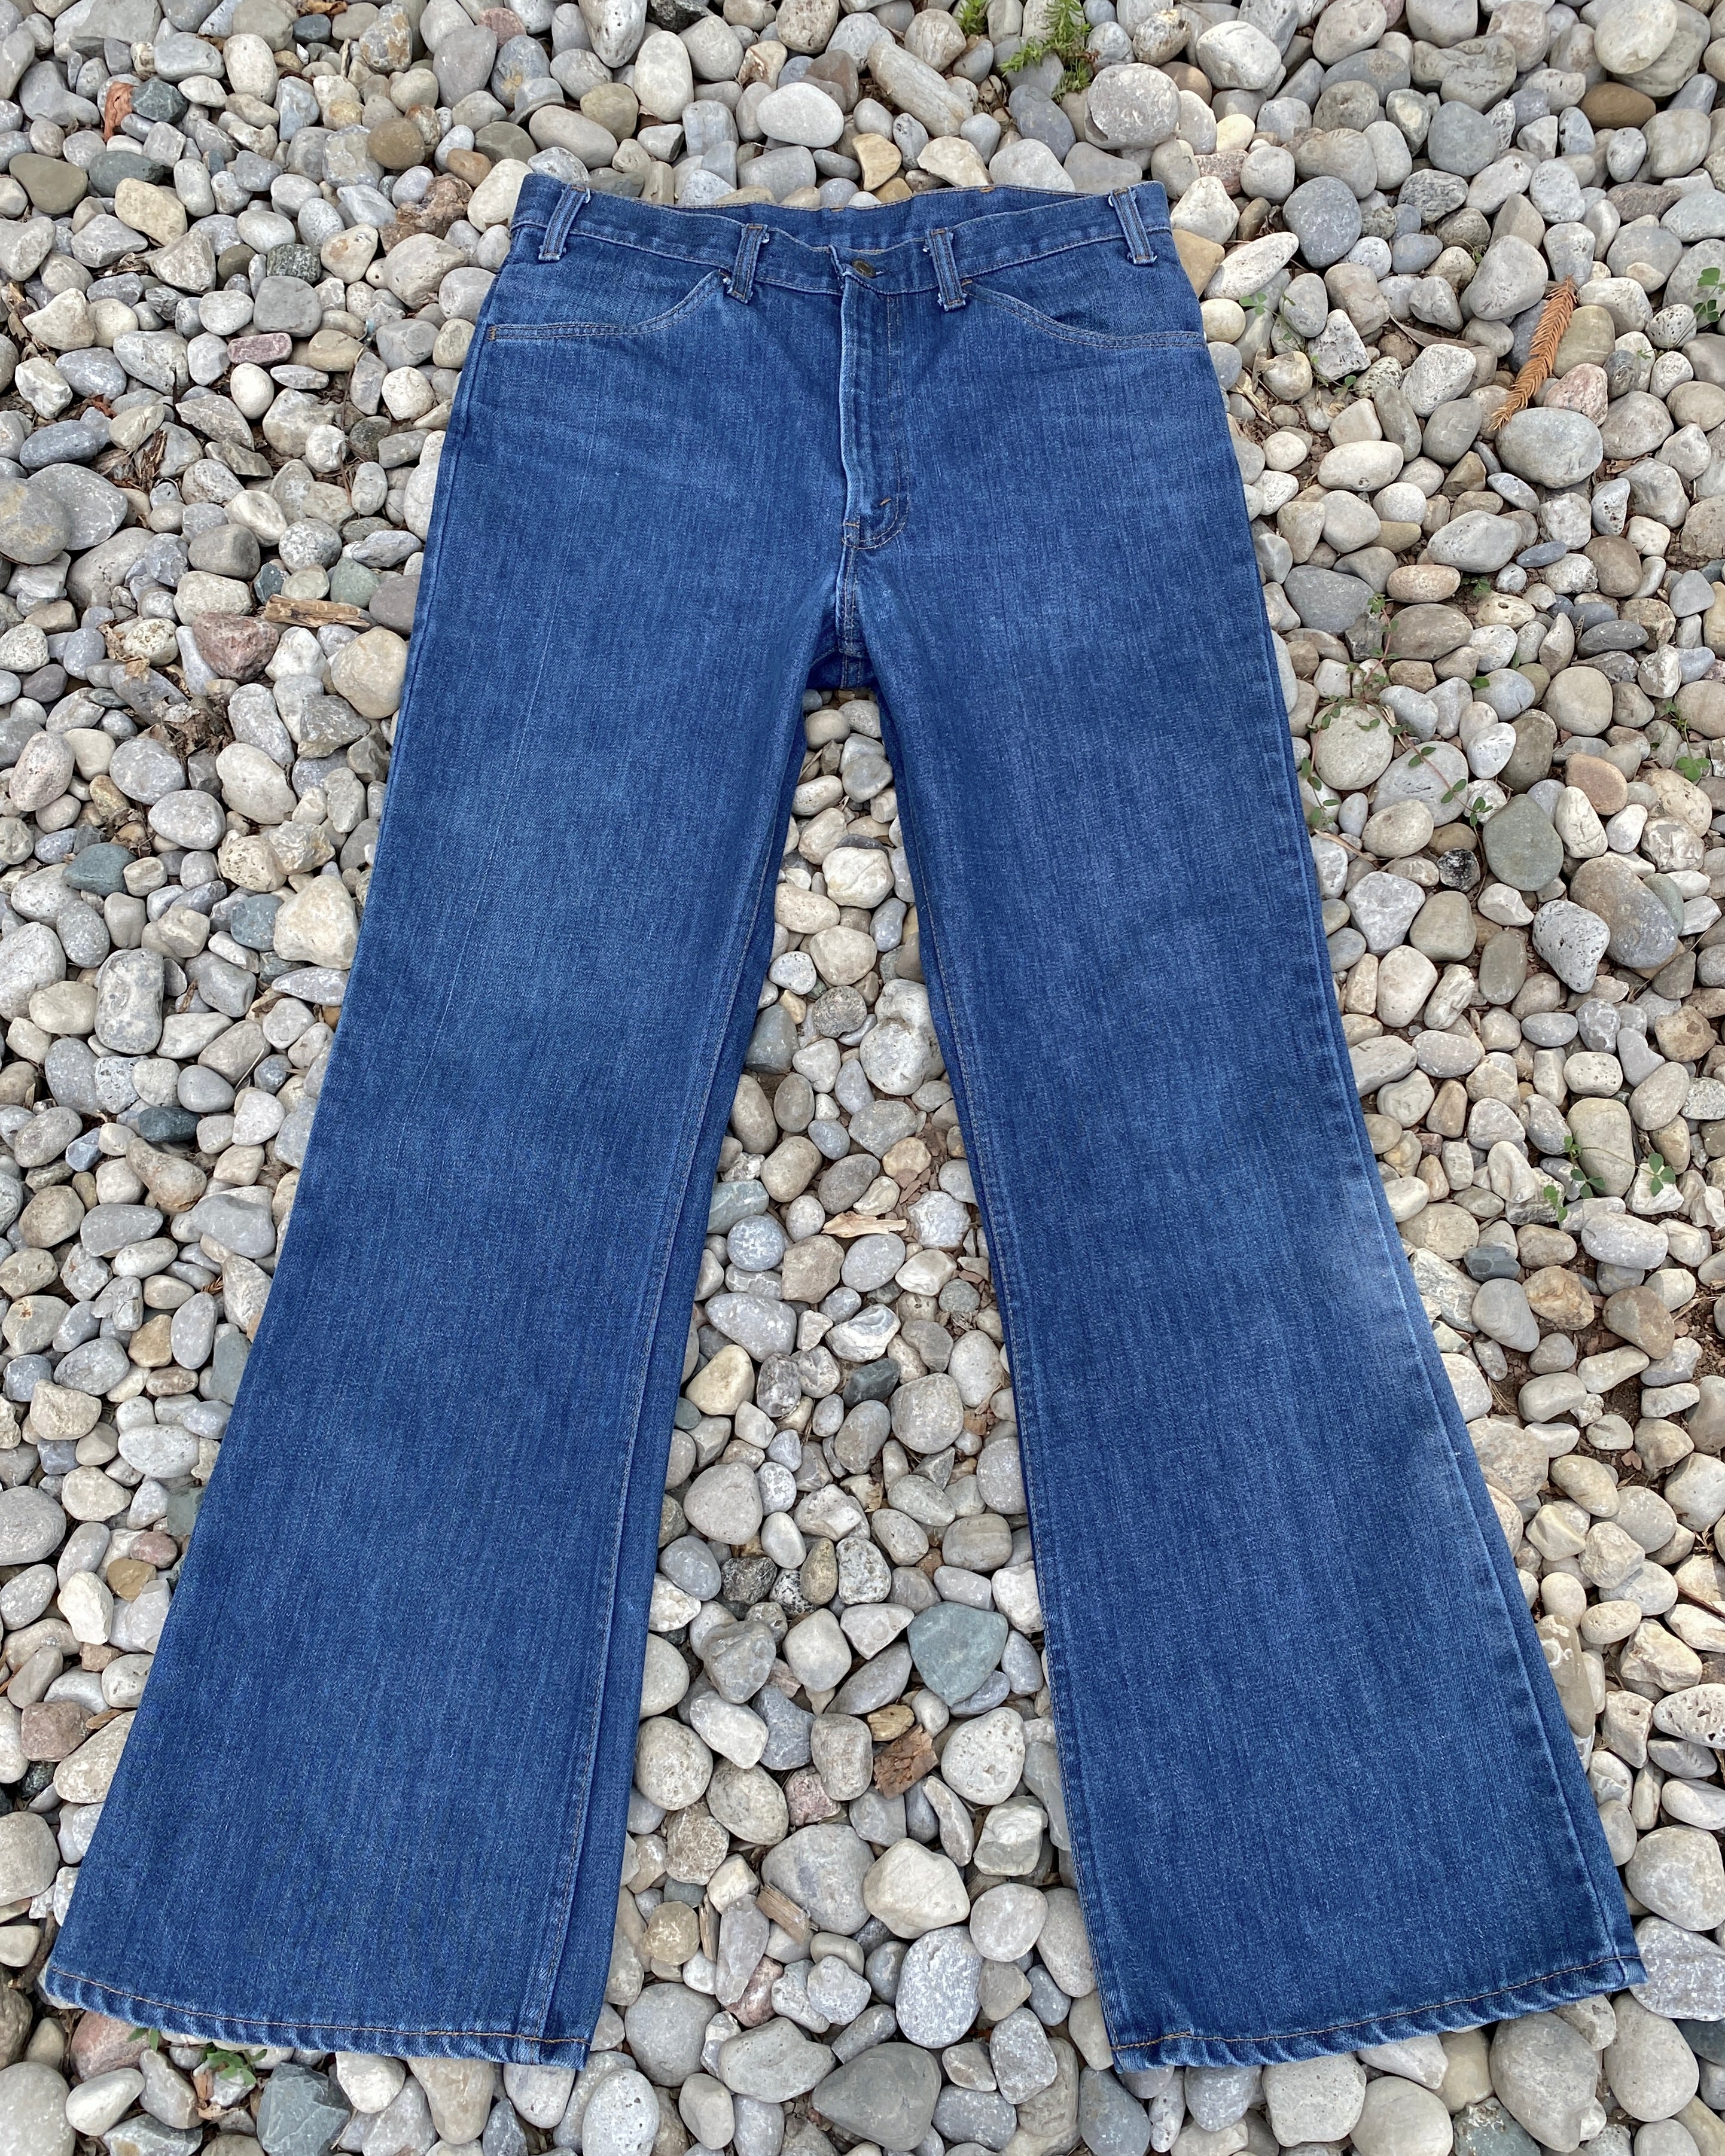 Vintage 1970s Levis 517 Orange Tab Medium to Dark Wash Flare Jeans size 34